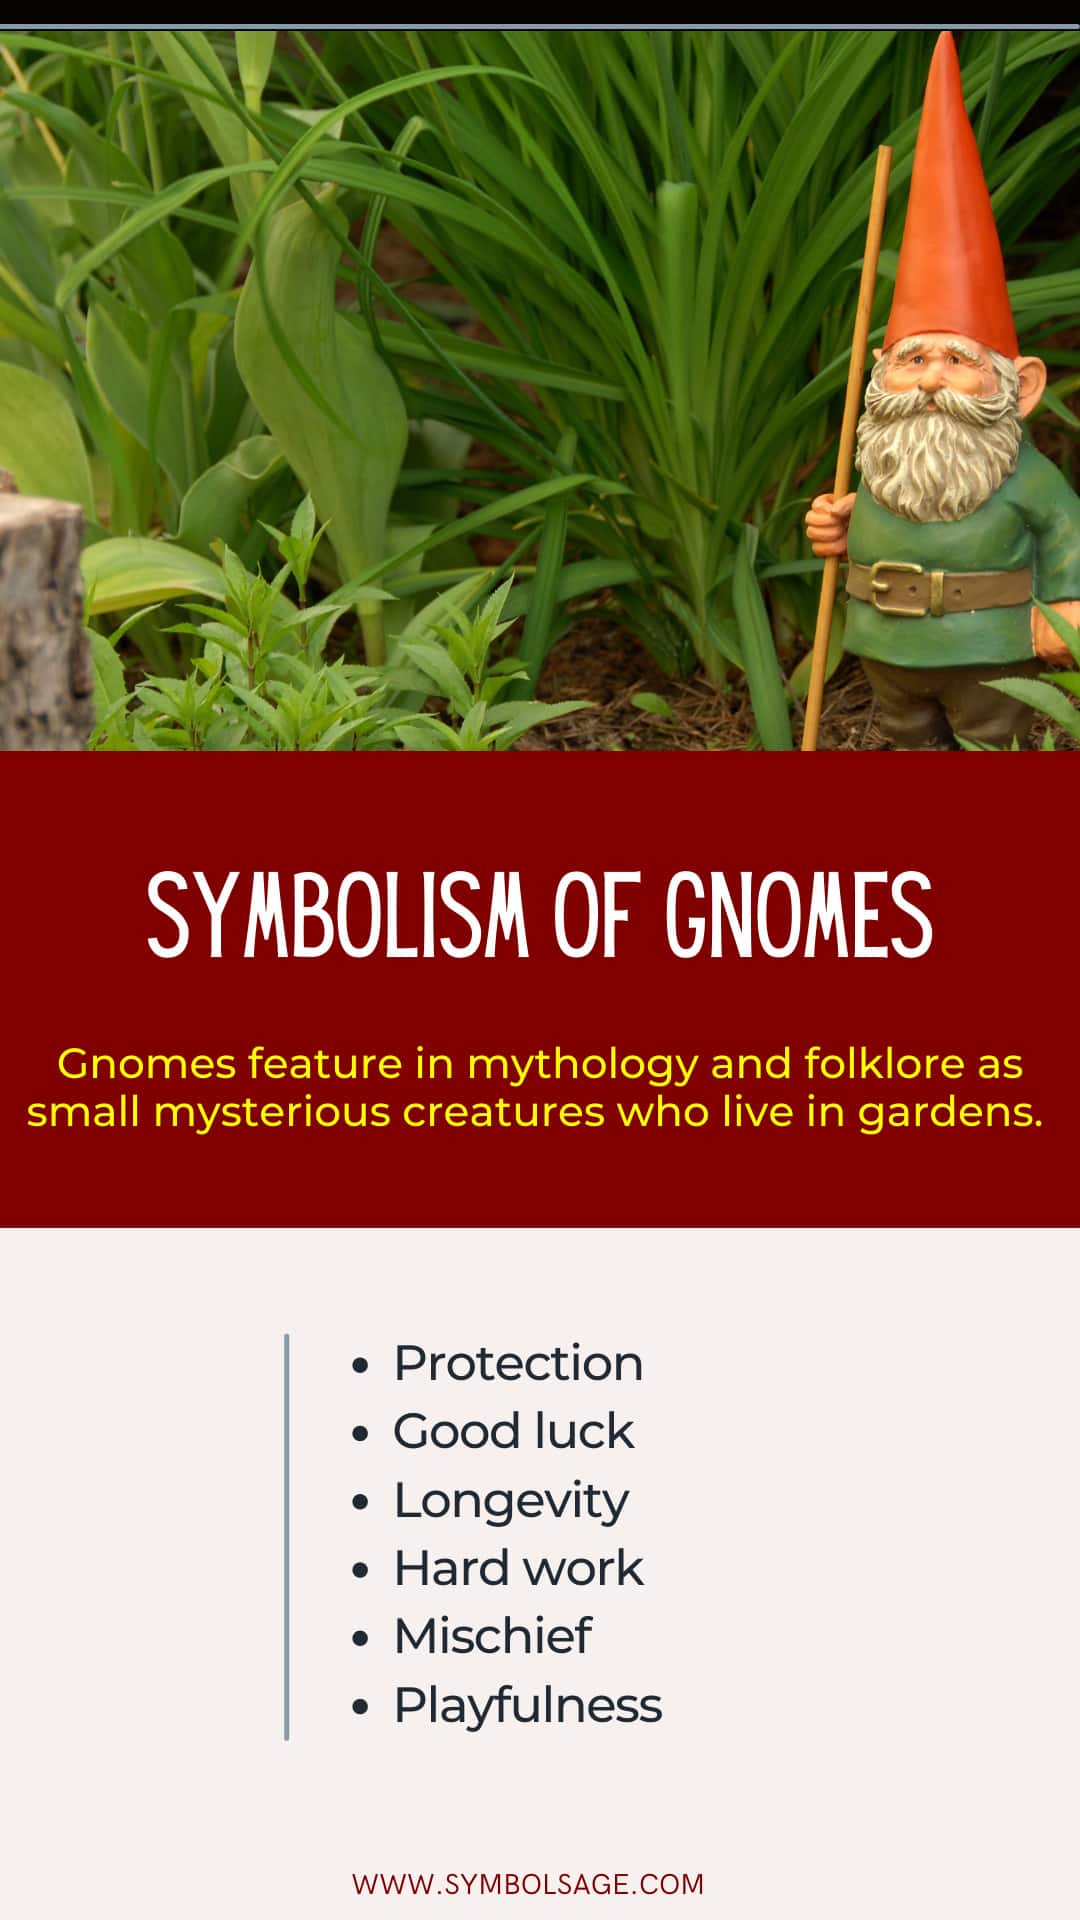 Symbolism of gnomes